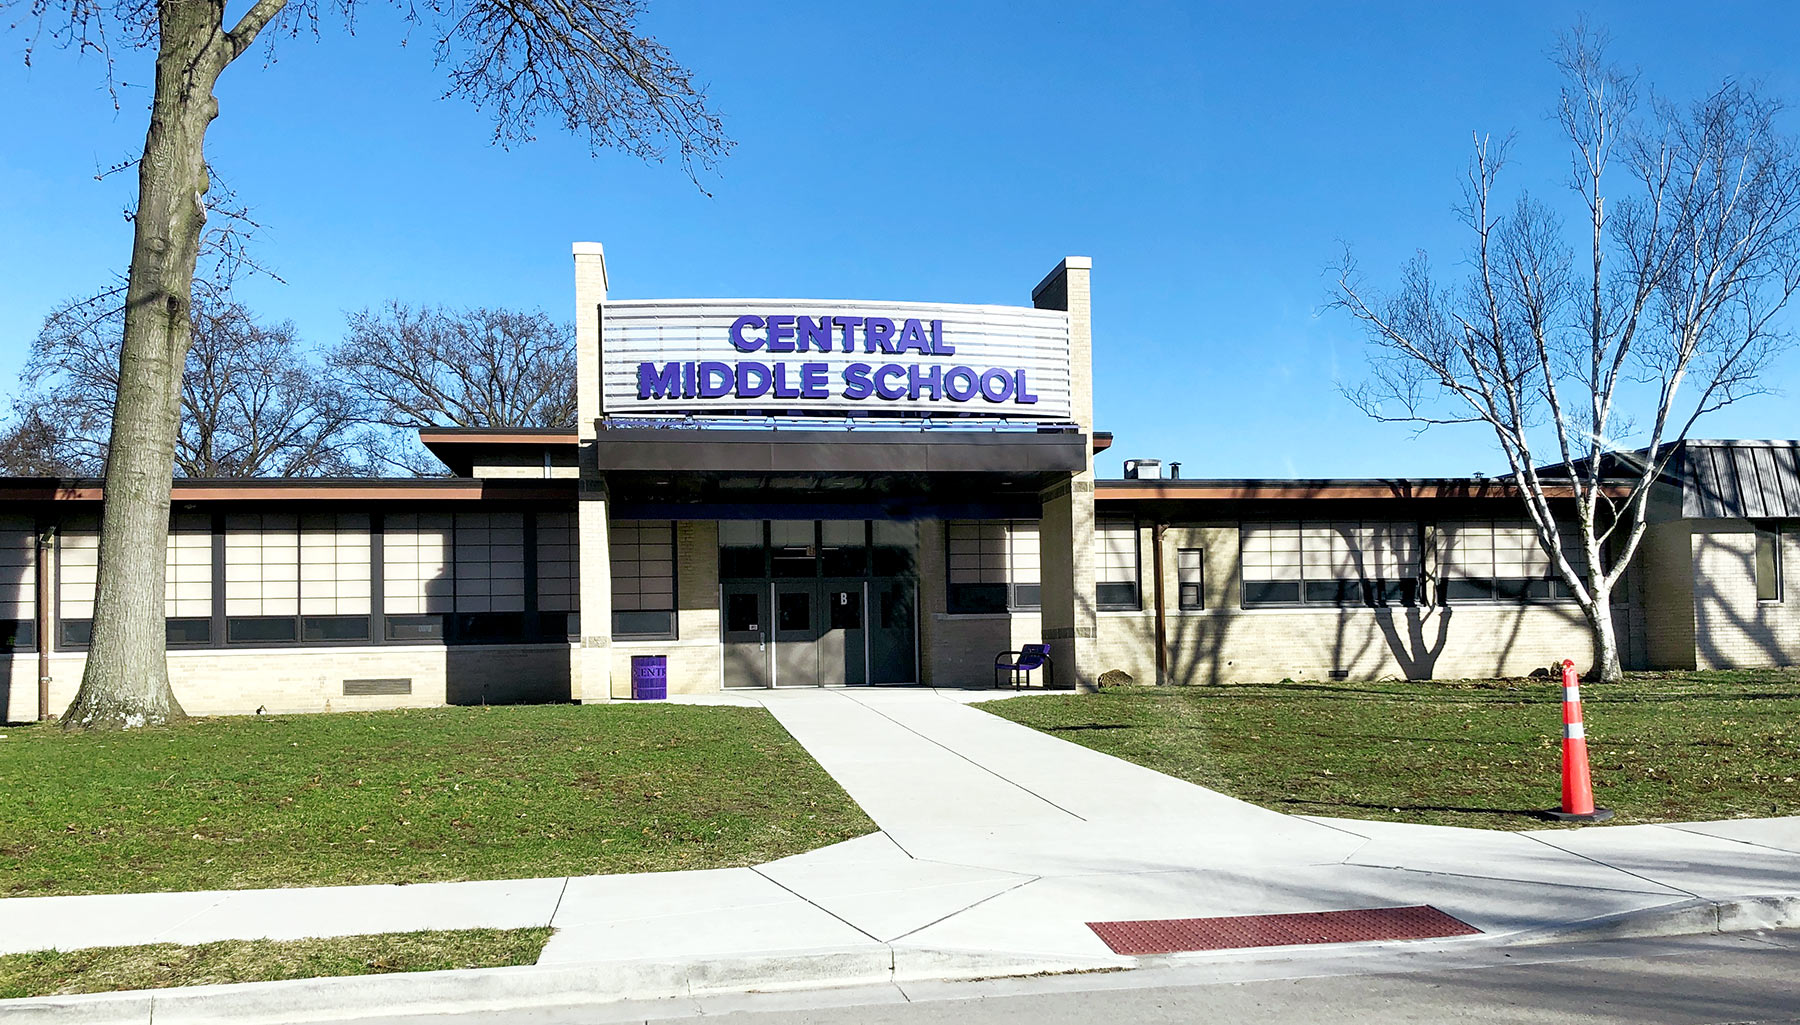 Shores Builders, Centralia City School Project For Central Middle School in Centralia, Illinois